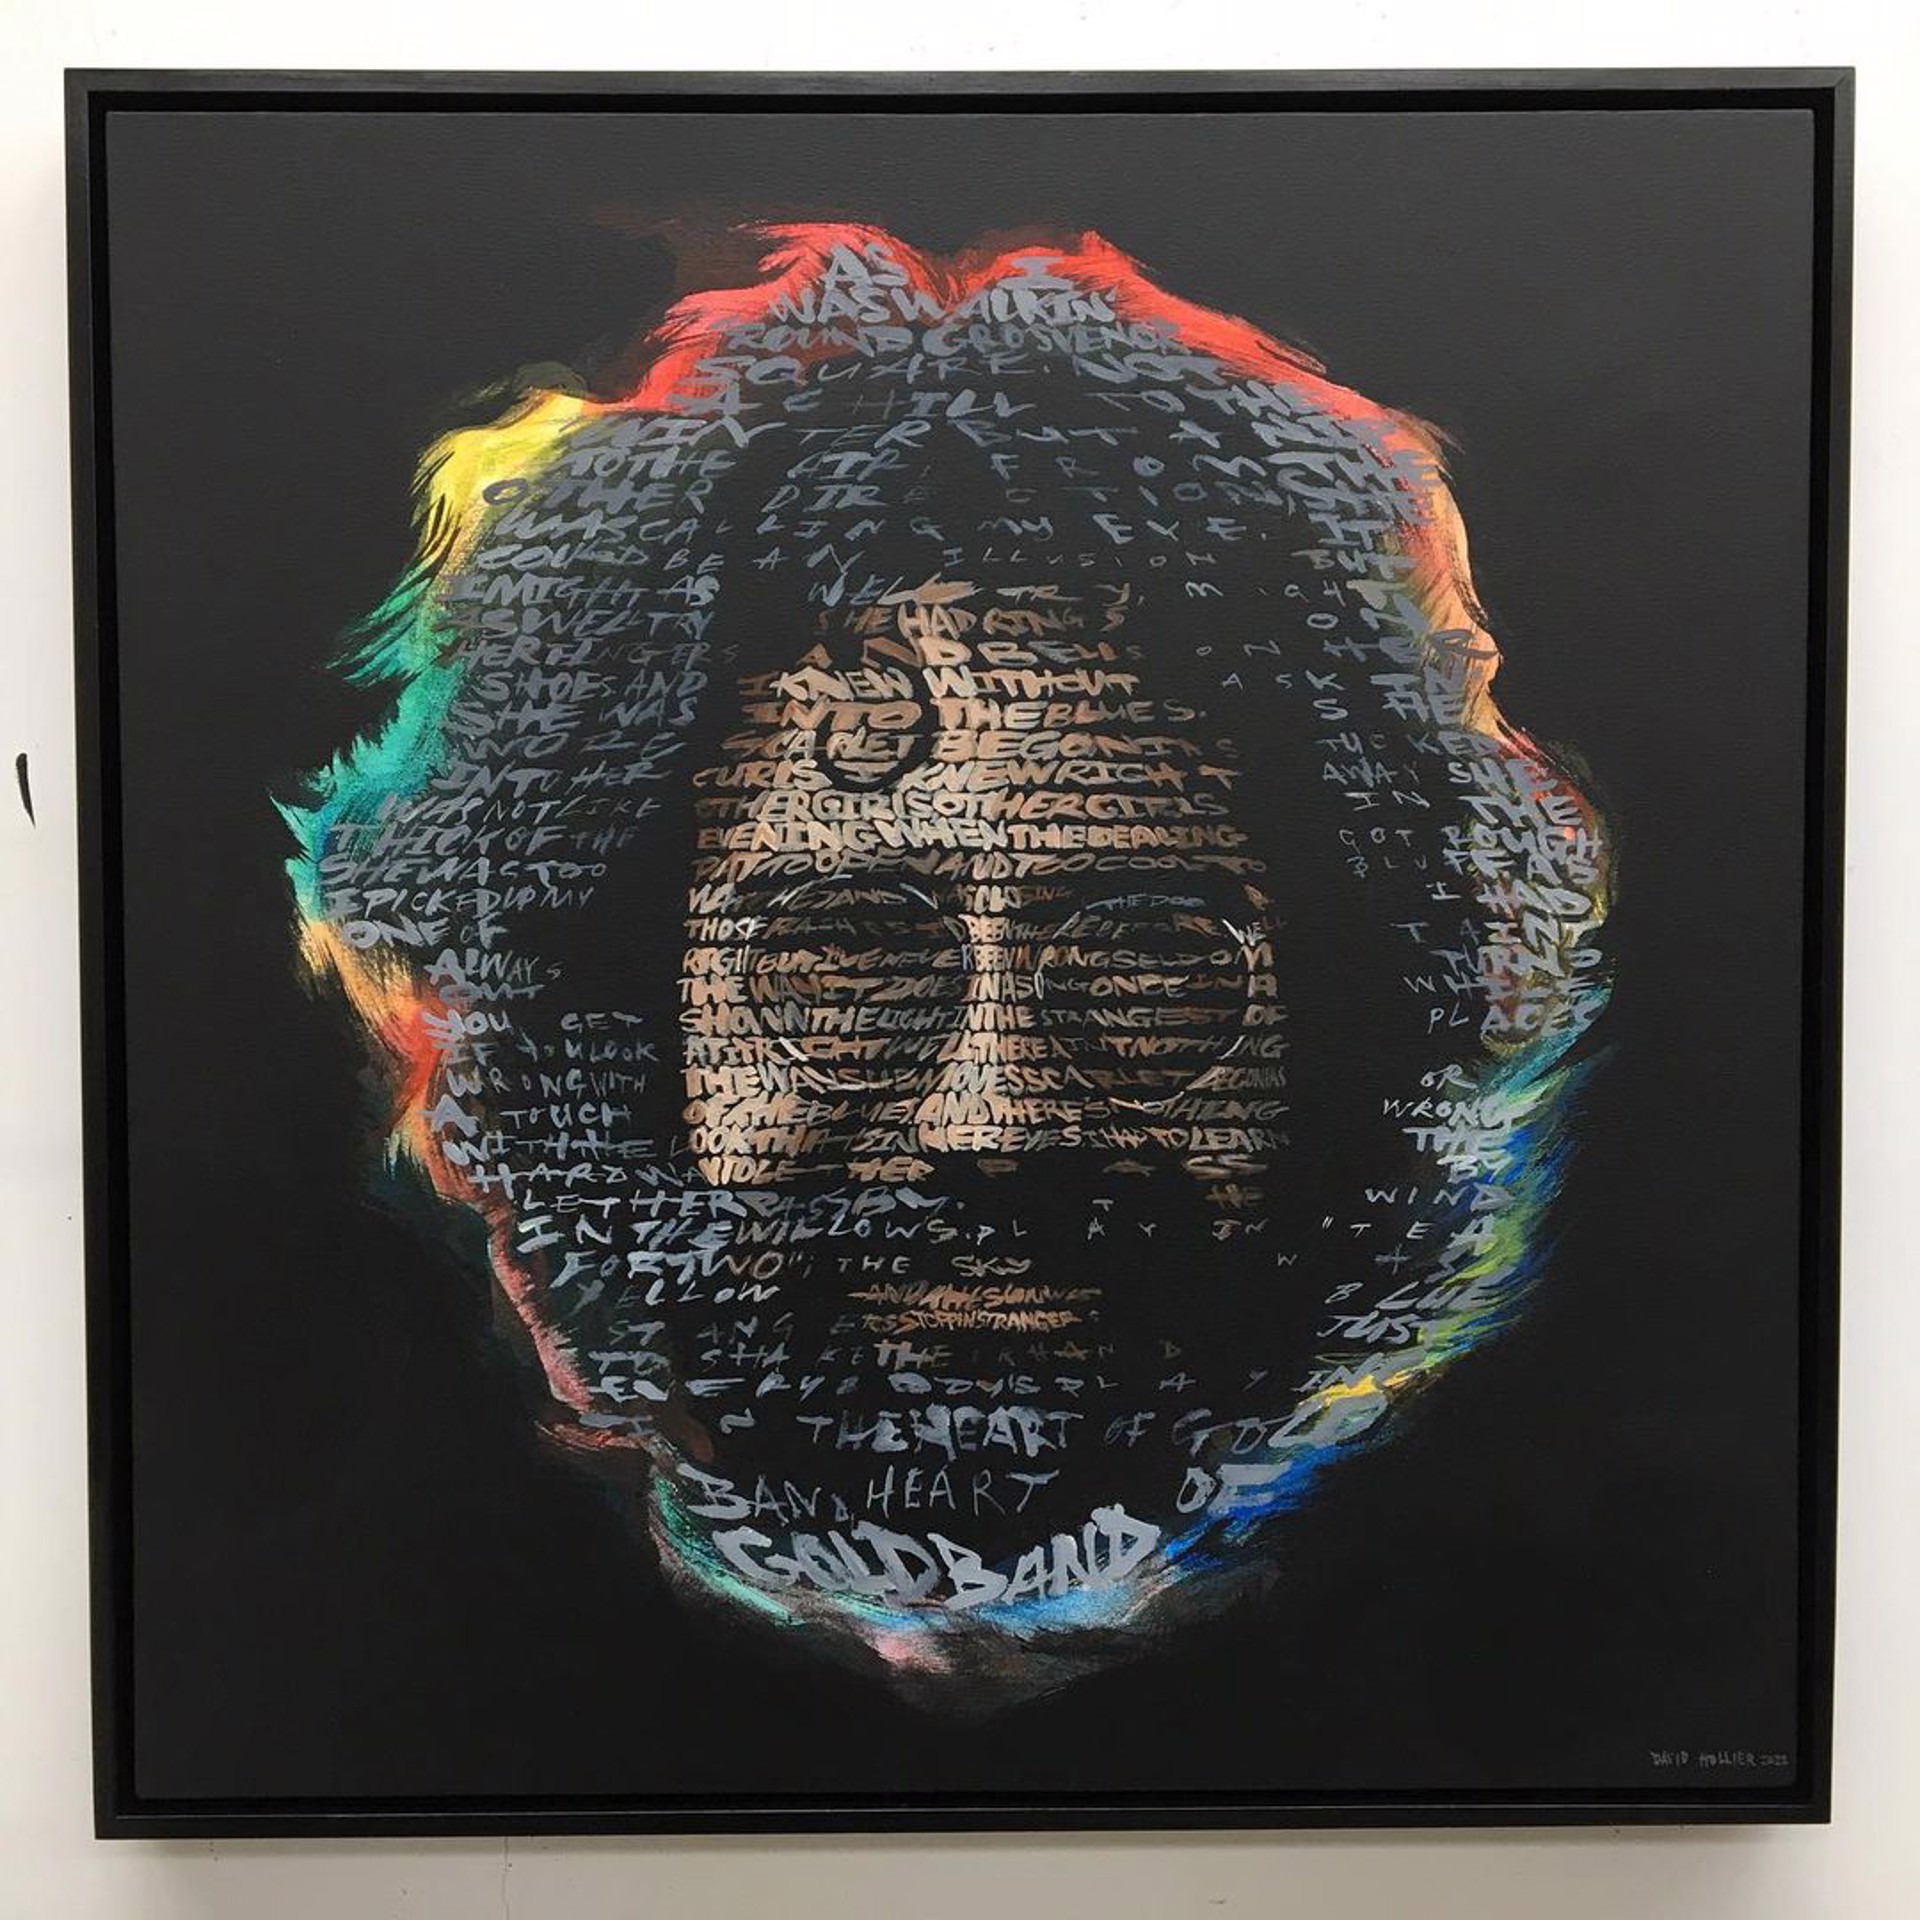 Jerry Garcia (Text: Scarlet Begonias) by David Hollier